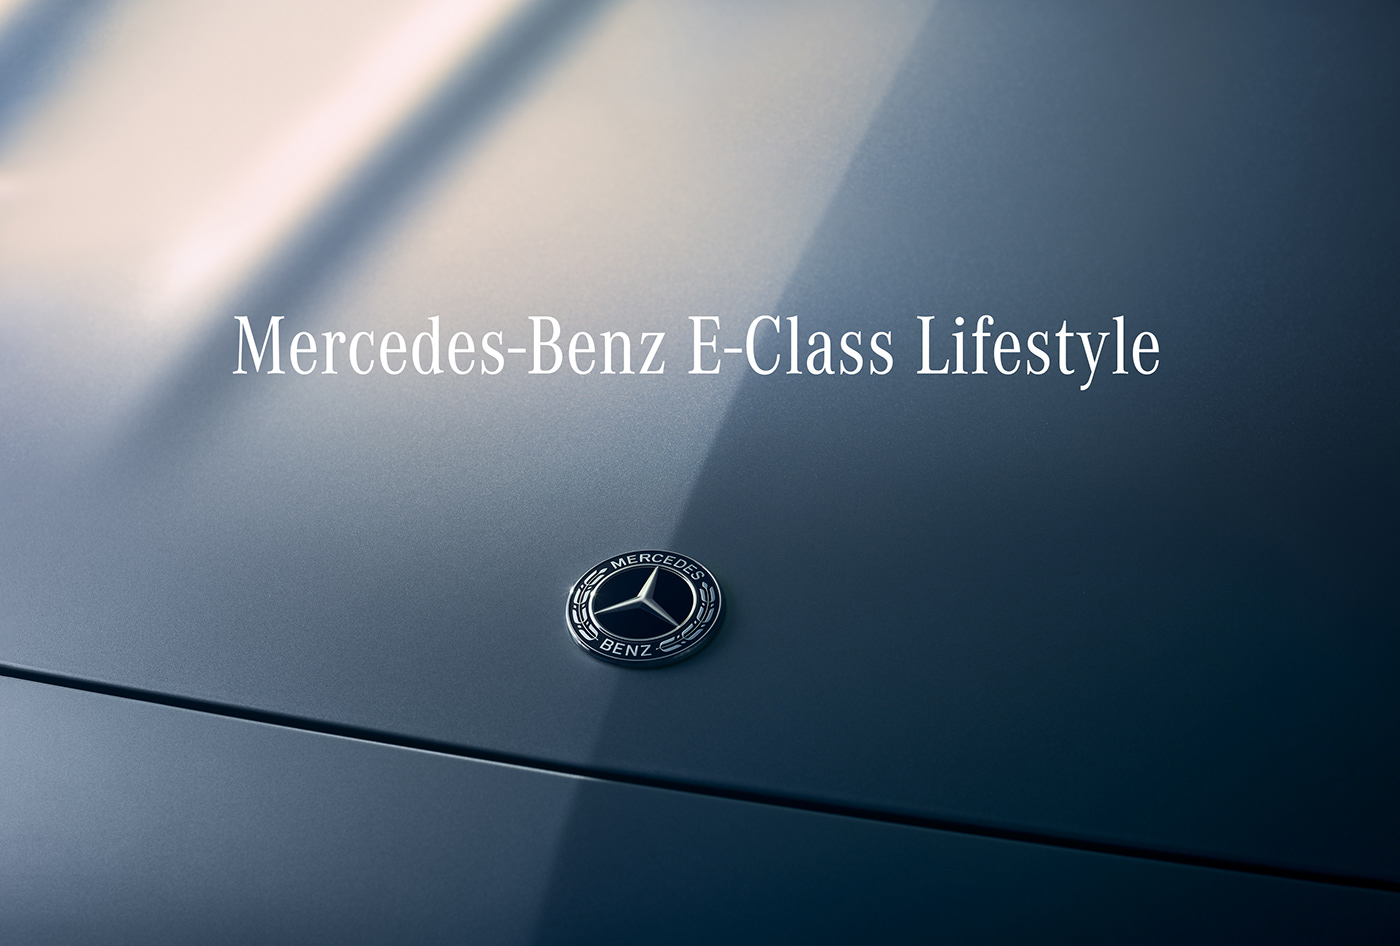 E-Class lifestyle mercedes-benz